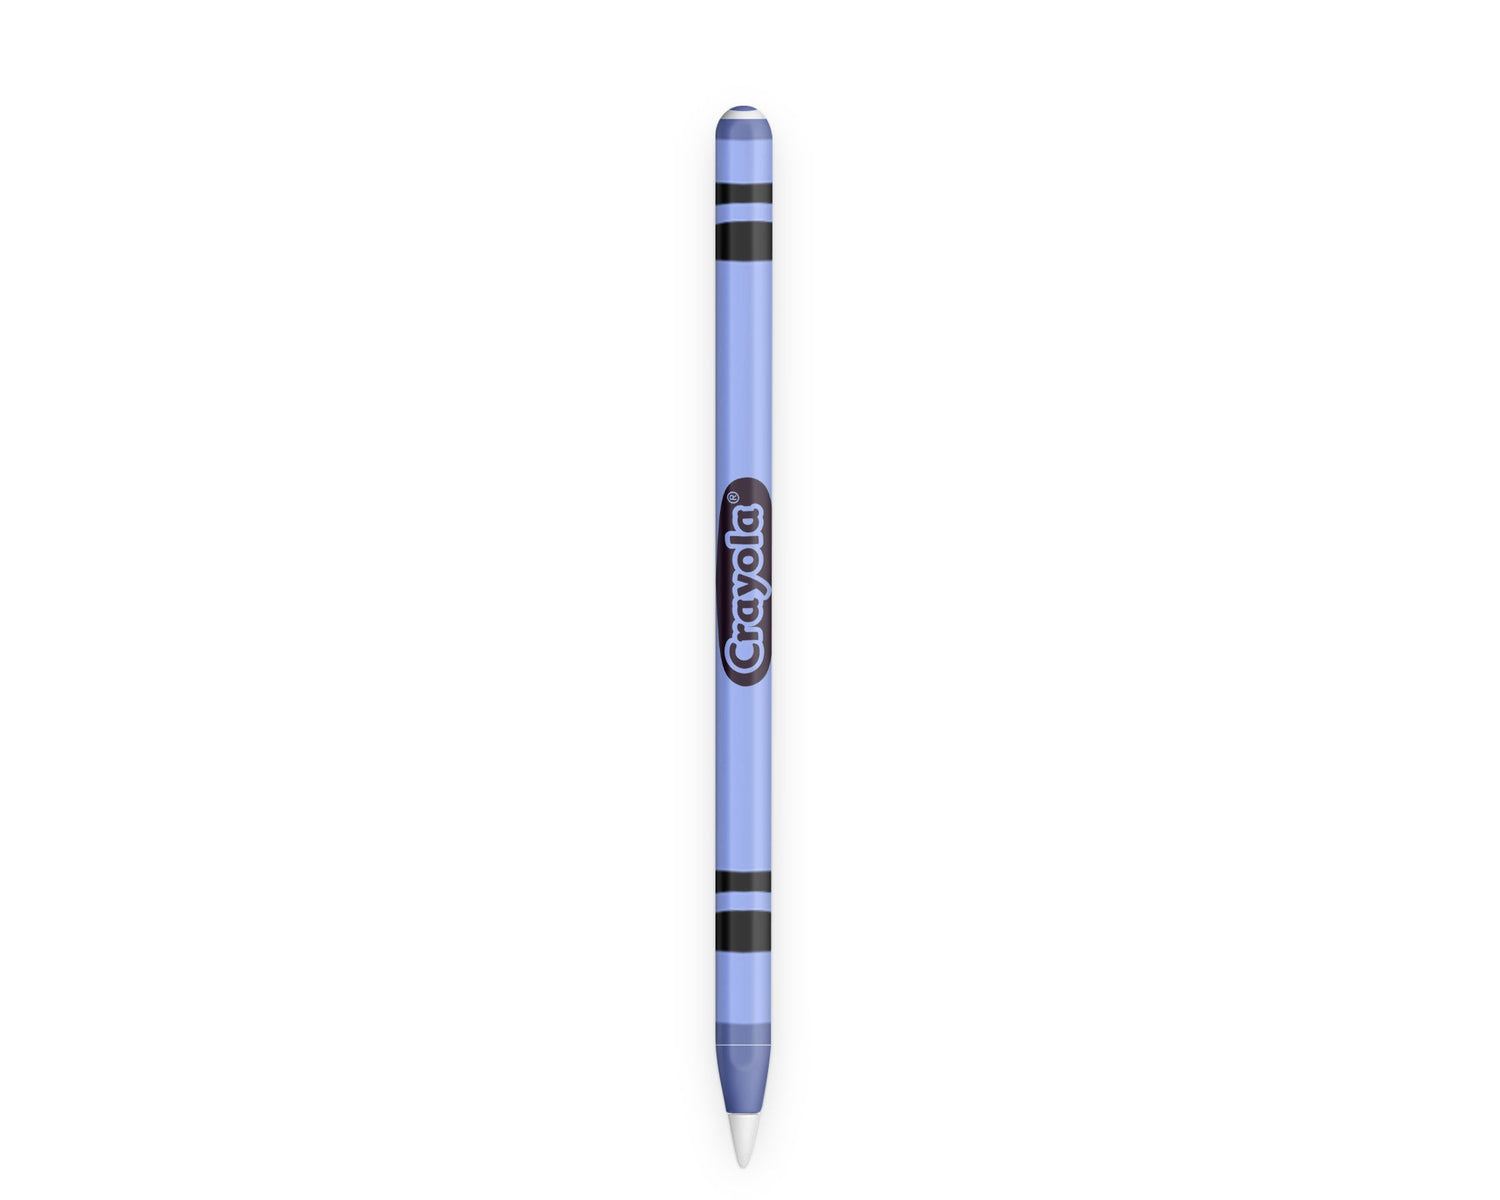 Lux Skins Apple Pencil Crayloa Blue 2nd Generation Skins - Art Crayola Series Skin